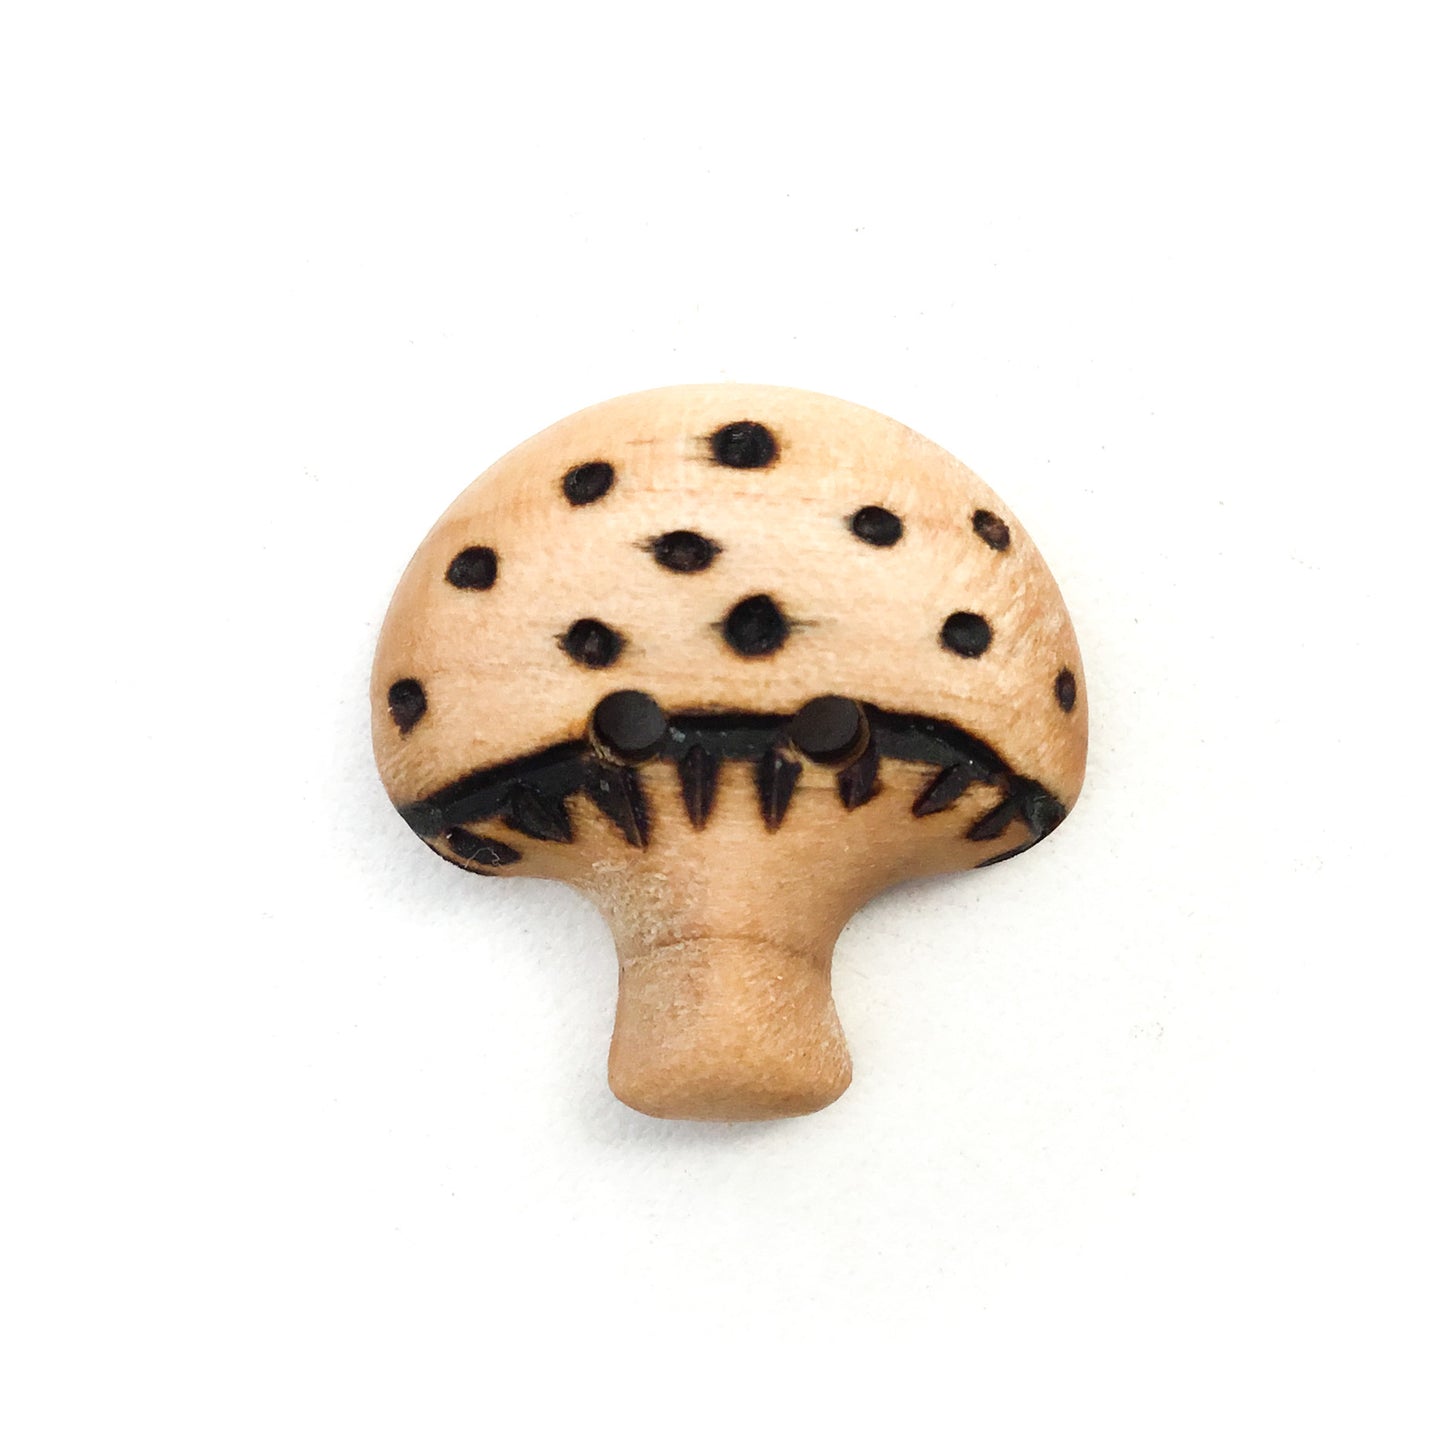 Wooden Mushroom Buttons -15/16"